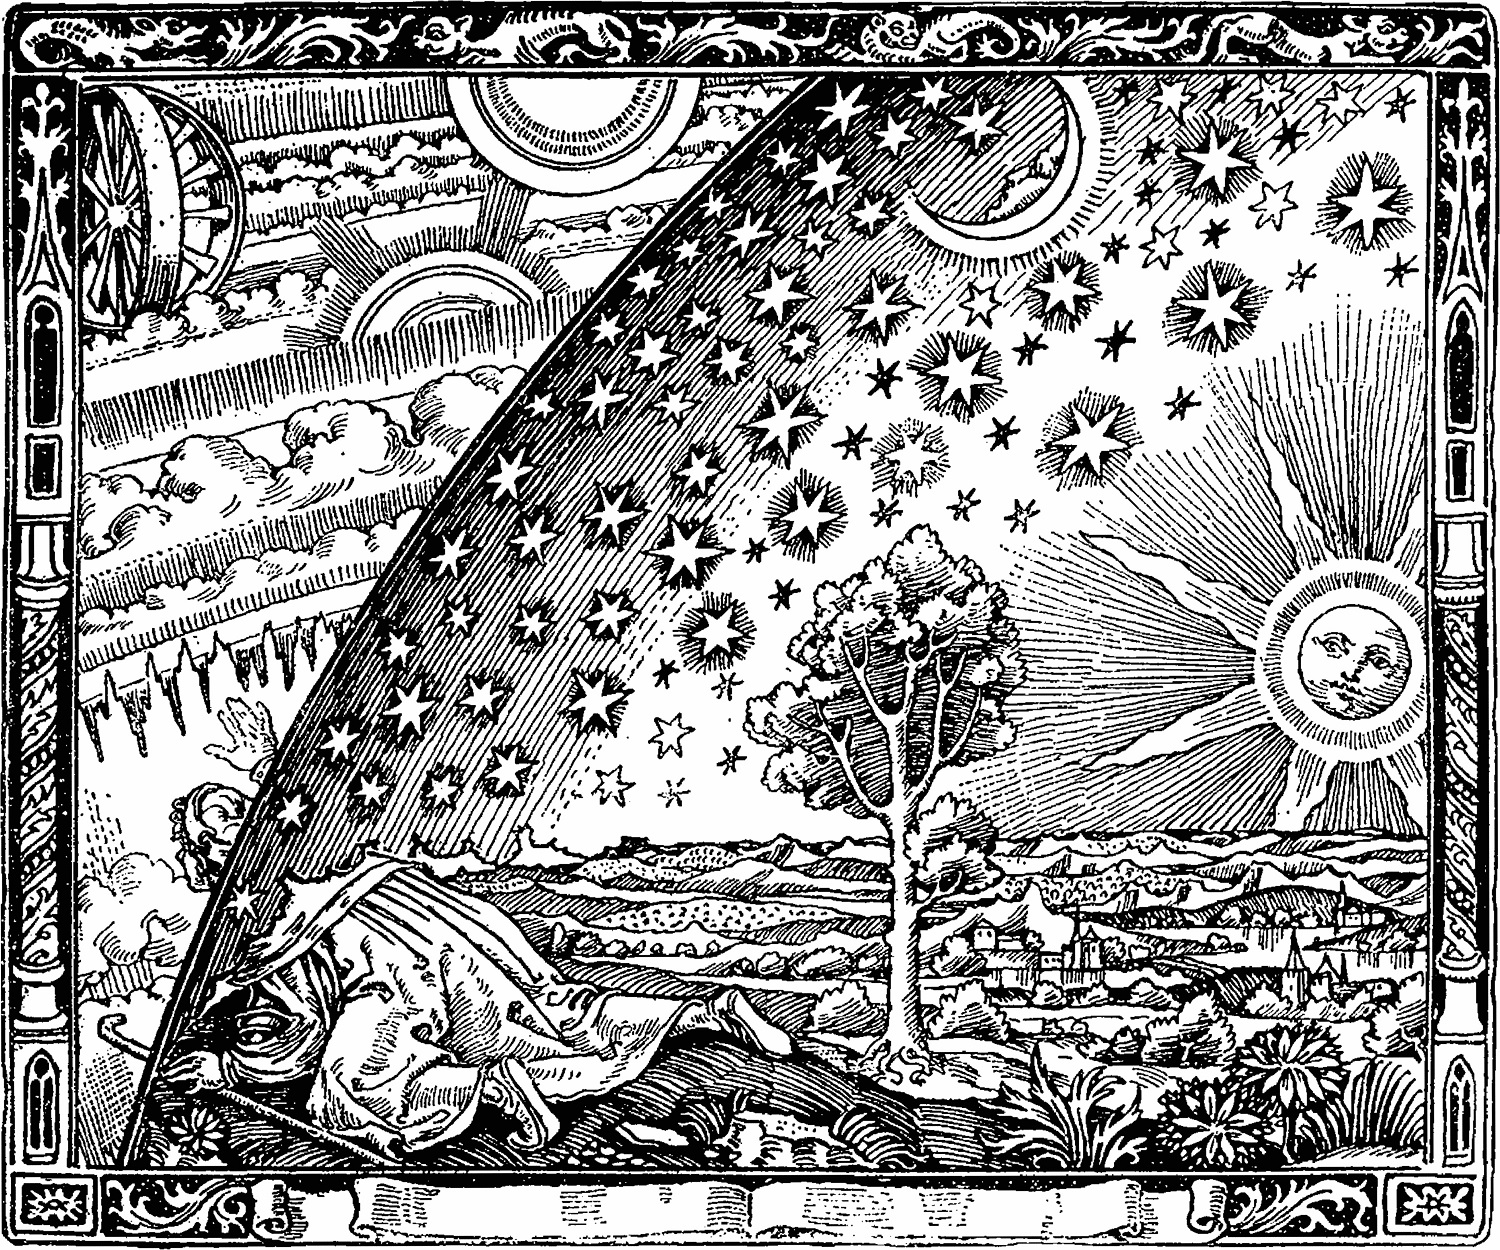 Flammarion cosmos engraving 19th century